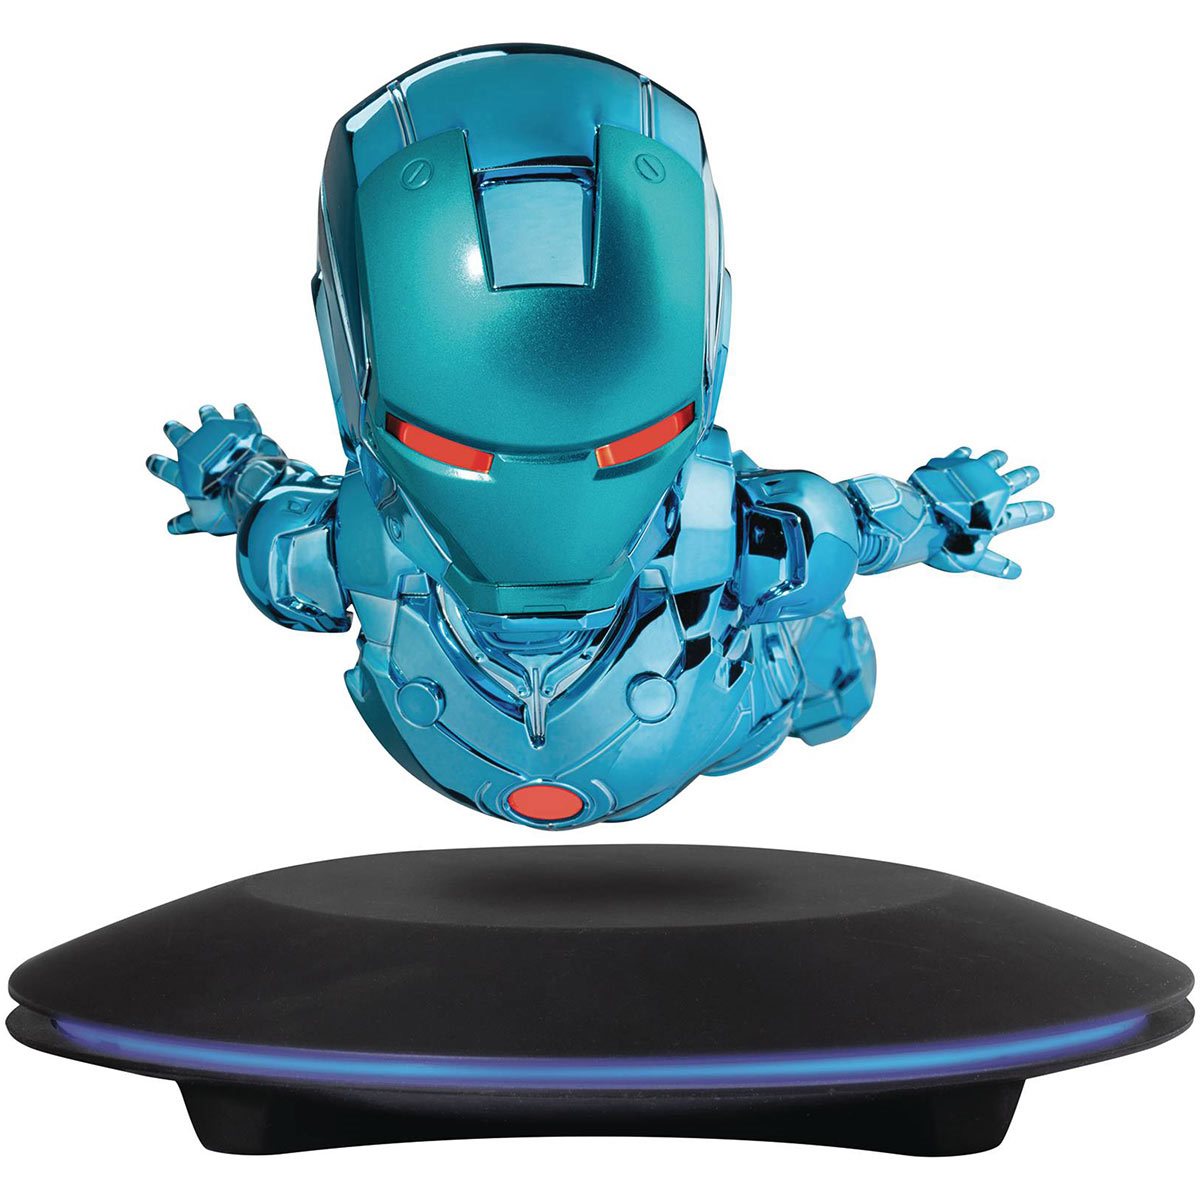 Iron Man Marvel Cinematic Universe MCU Model Statue Action Figure Toy